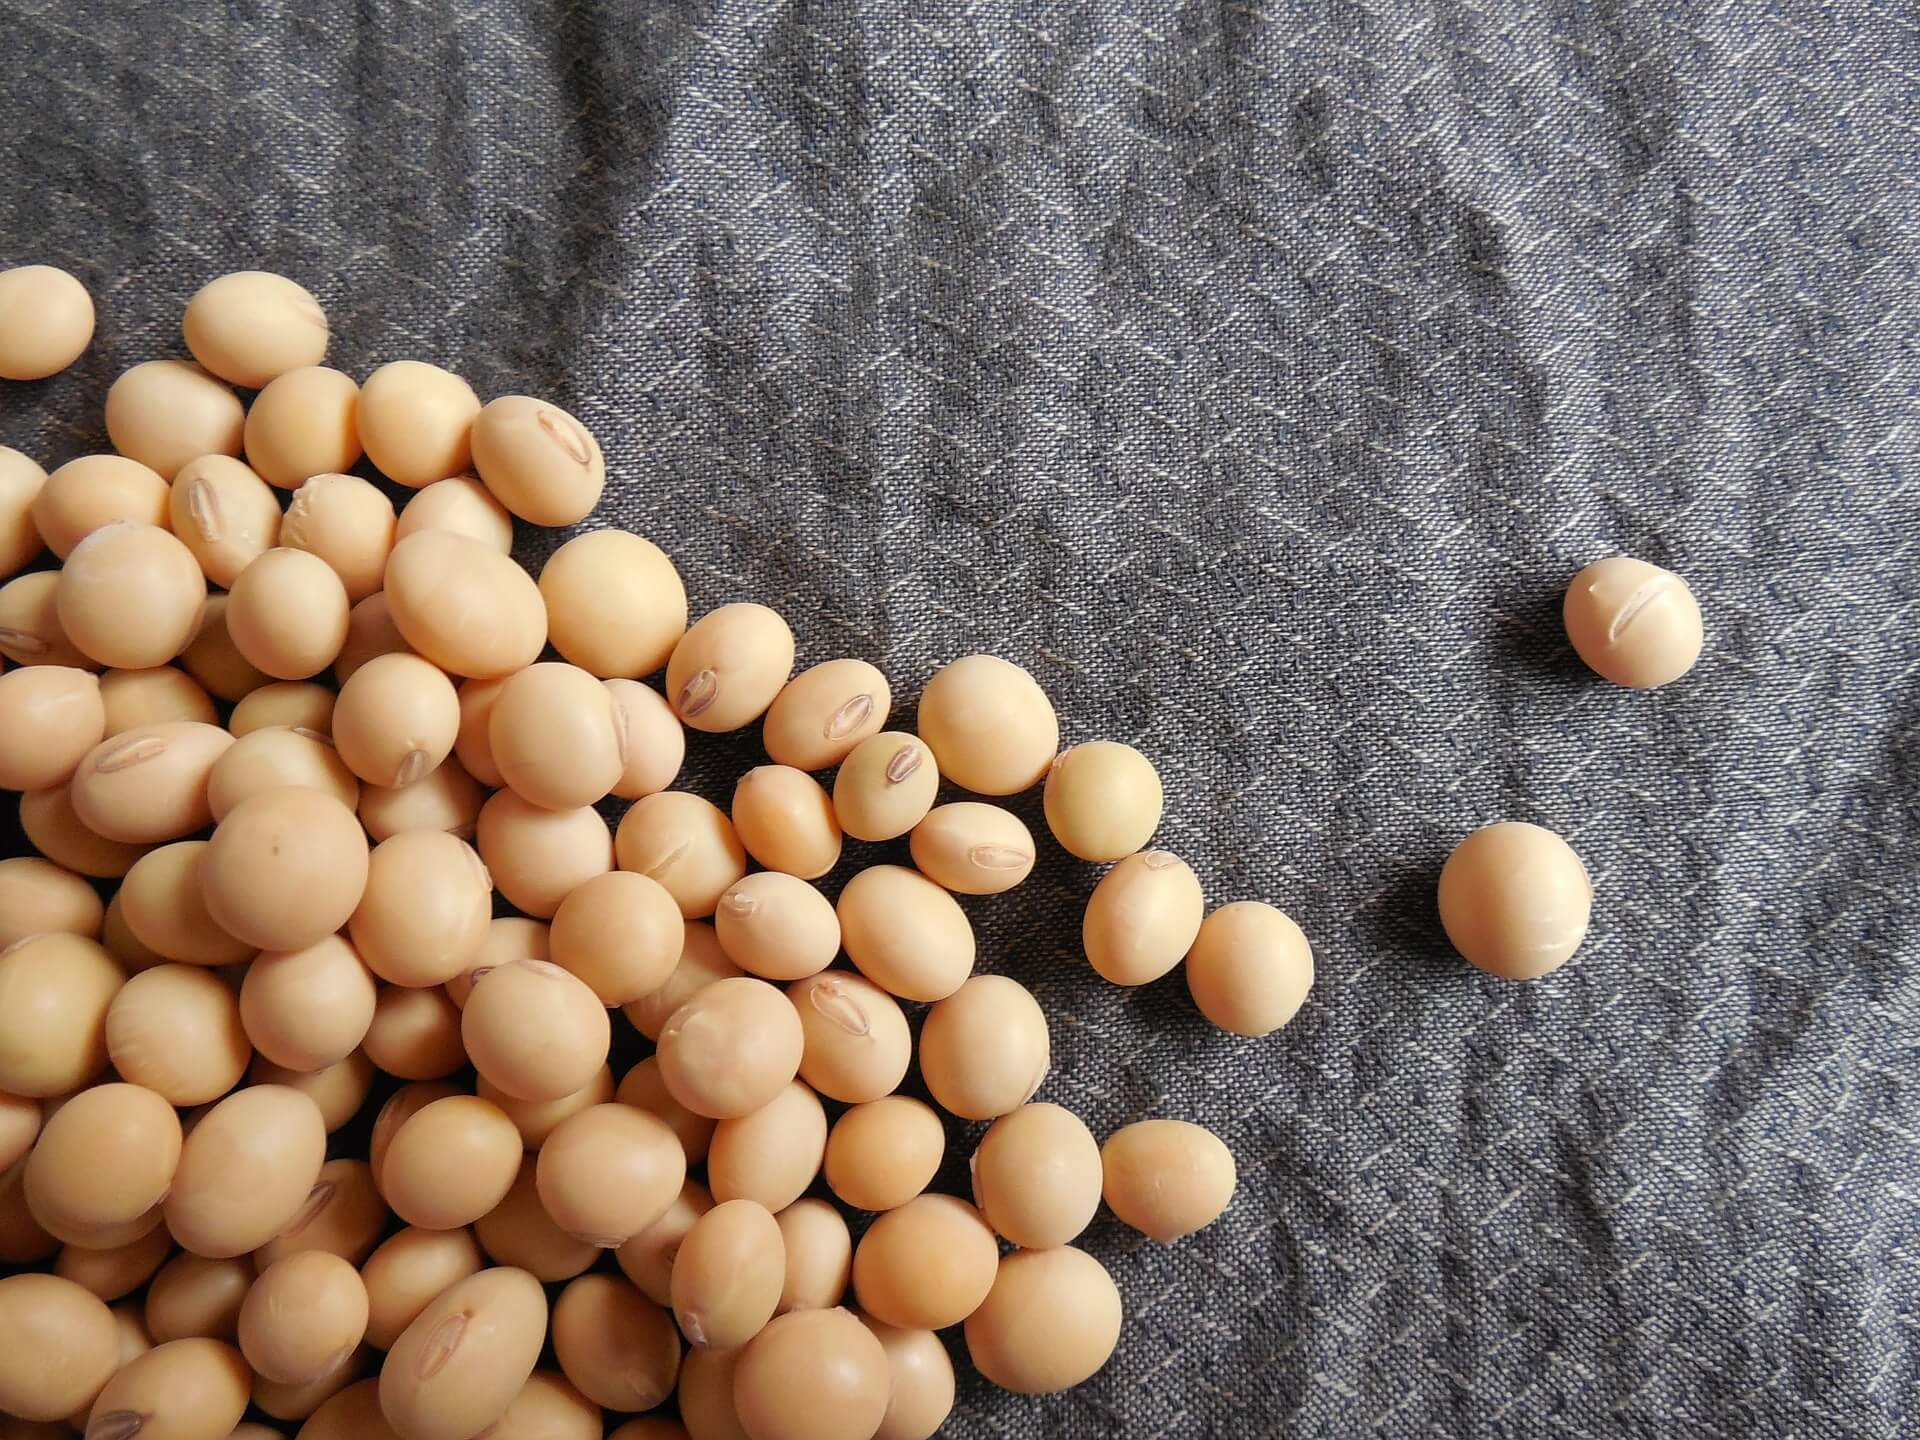 Kandungan Protein Pada Kacang Kedelai